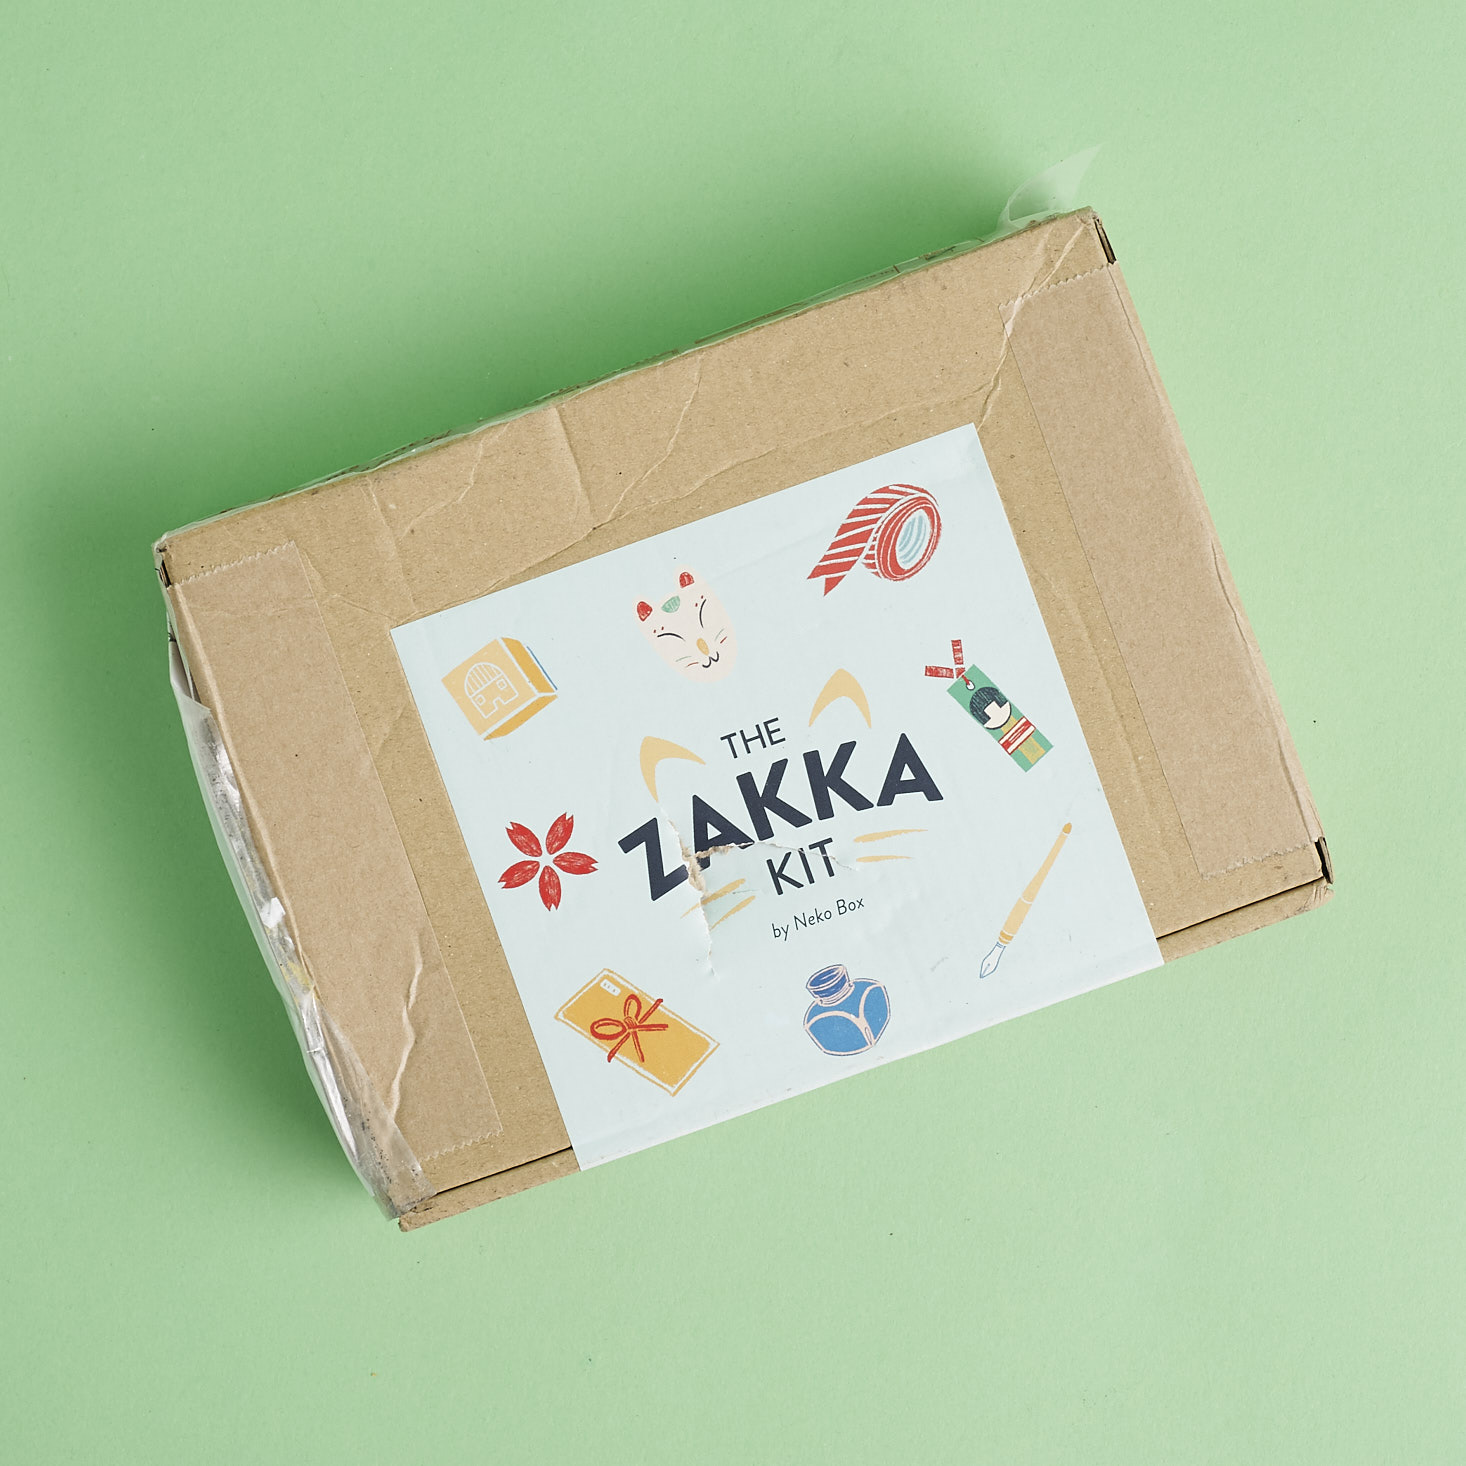 The Zakka Kit Stationery Review + Coupon – November 2018